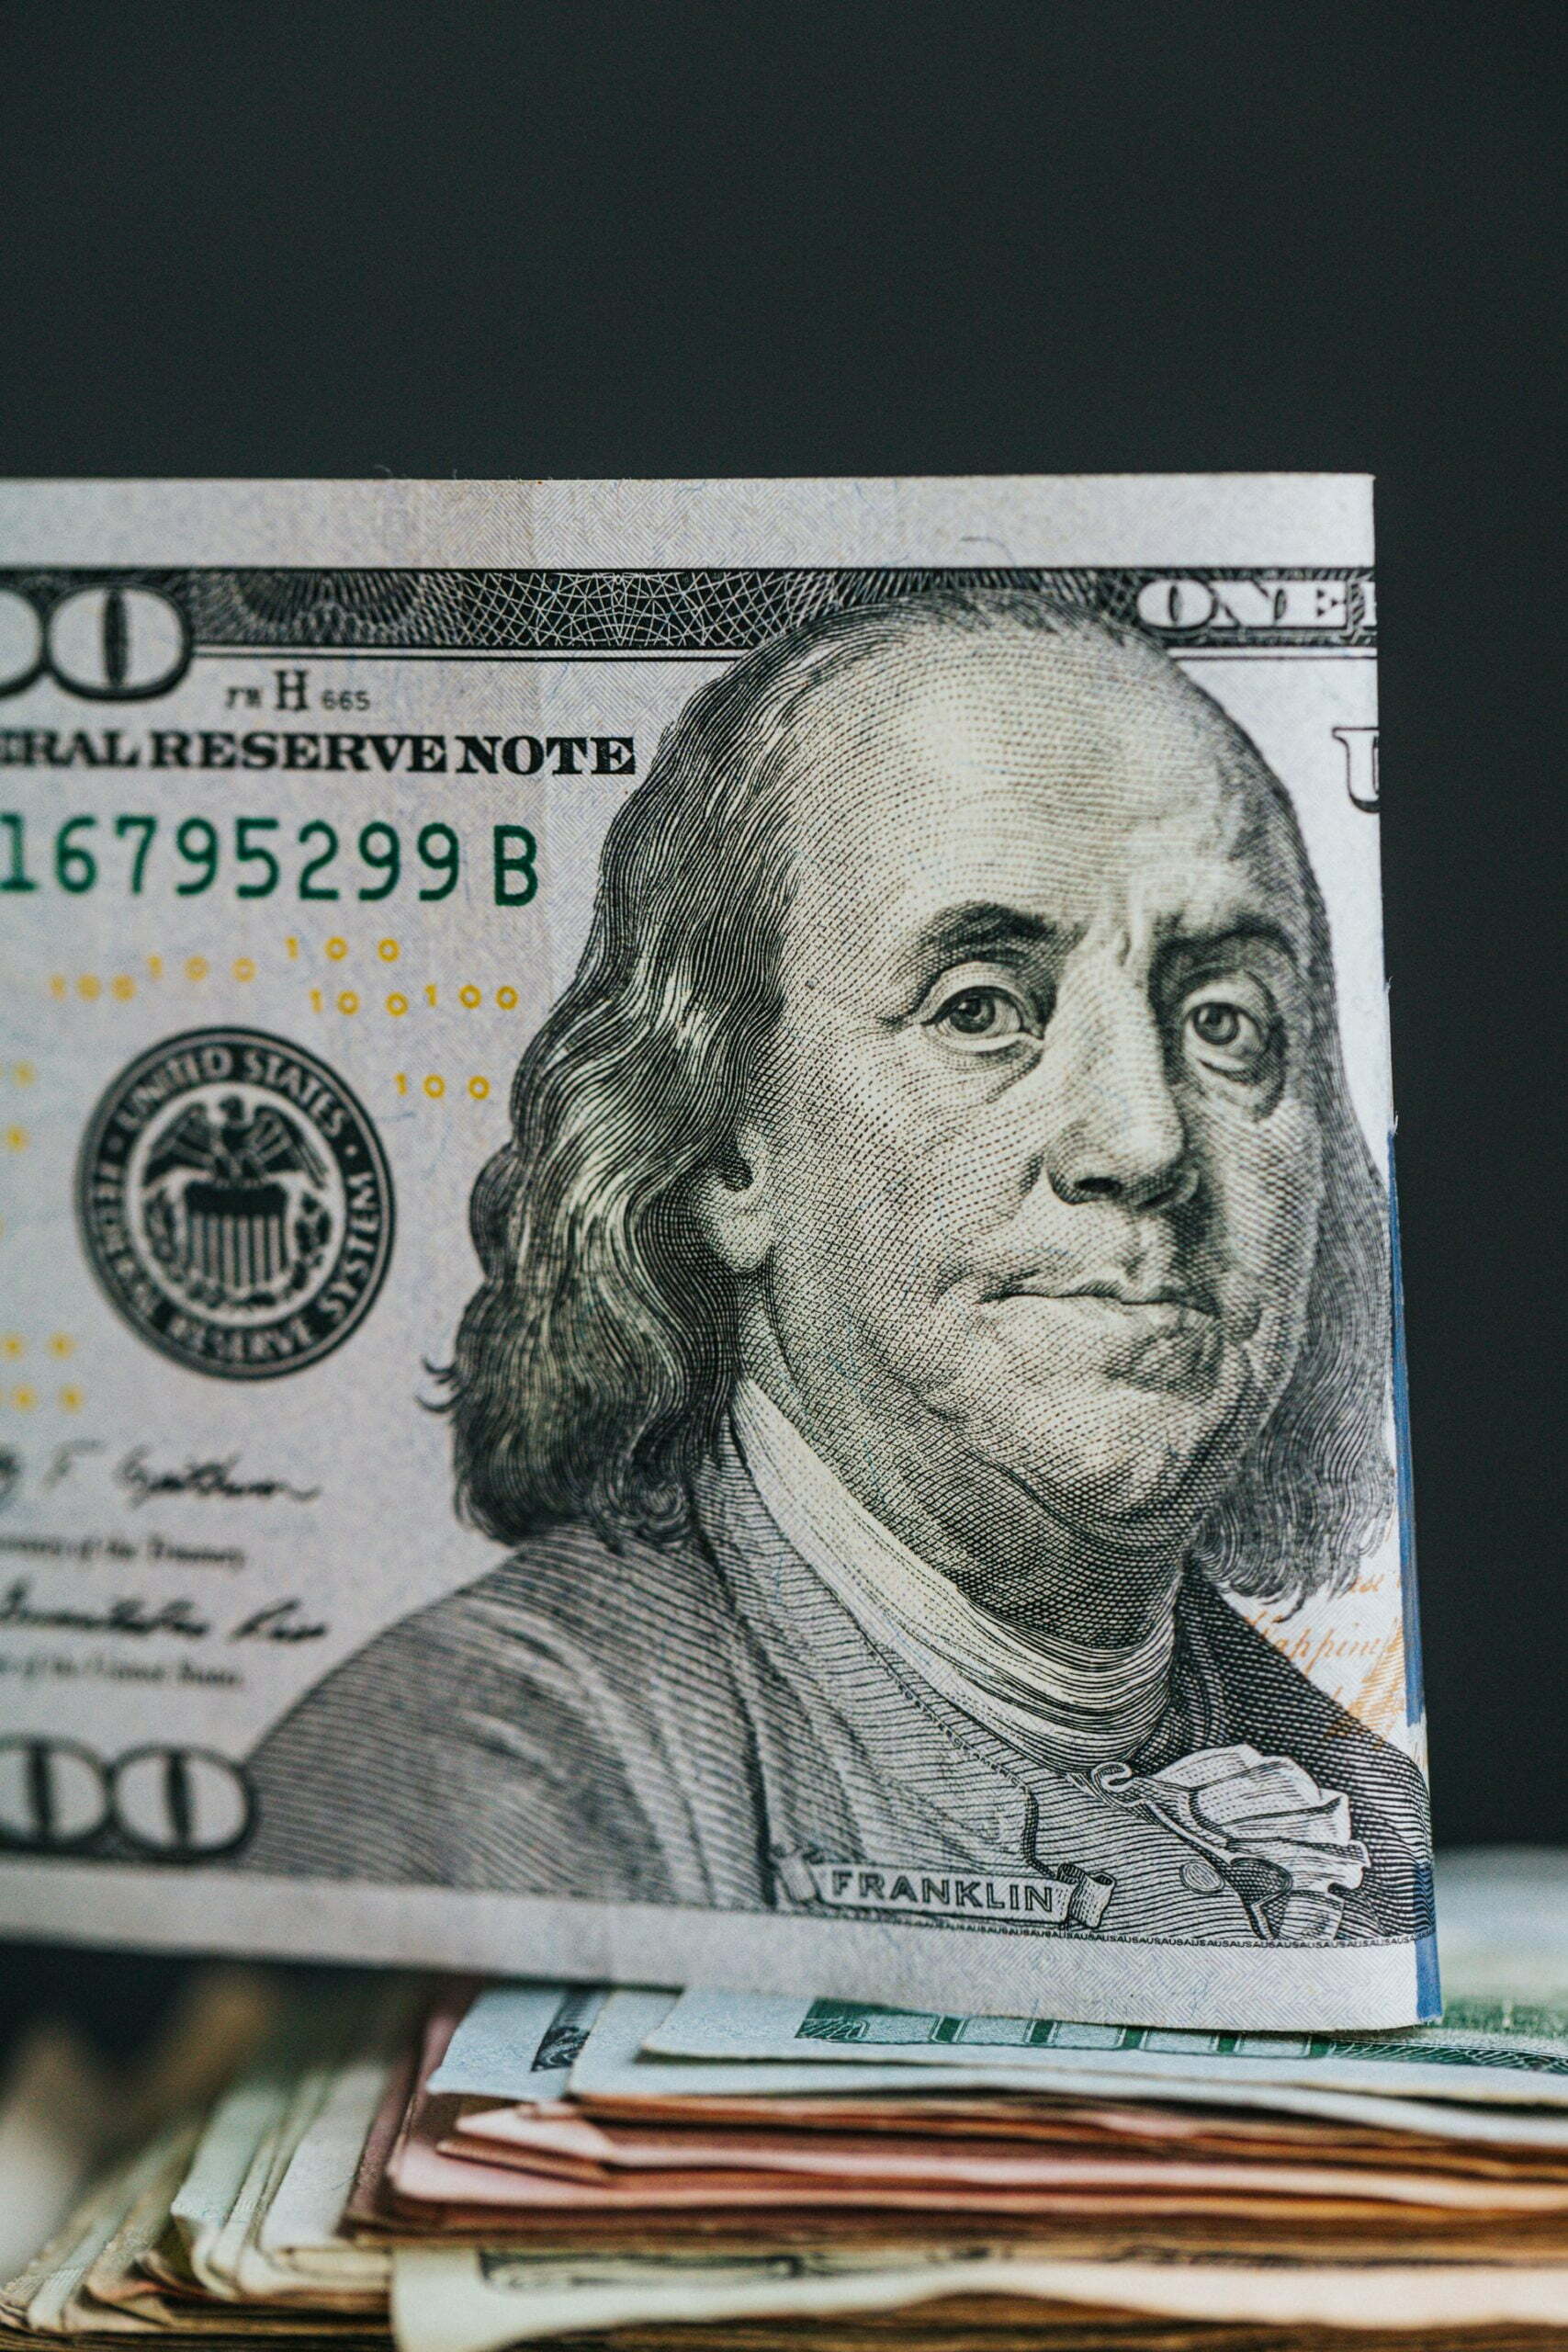 a close-up of Benjamin Franklin